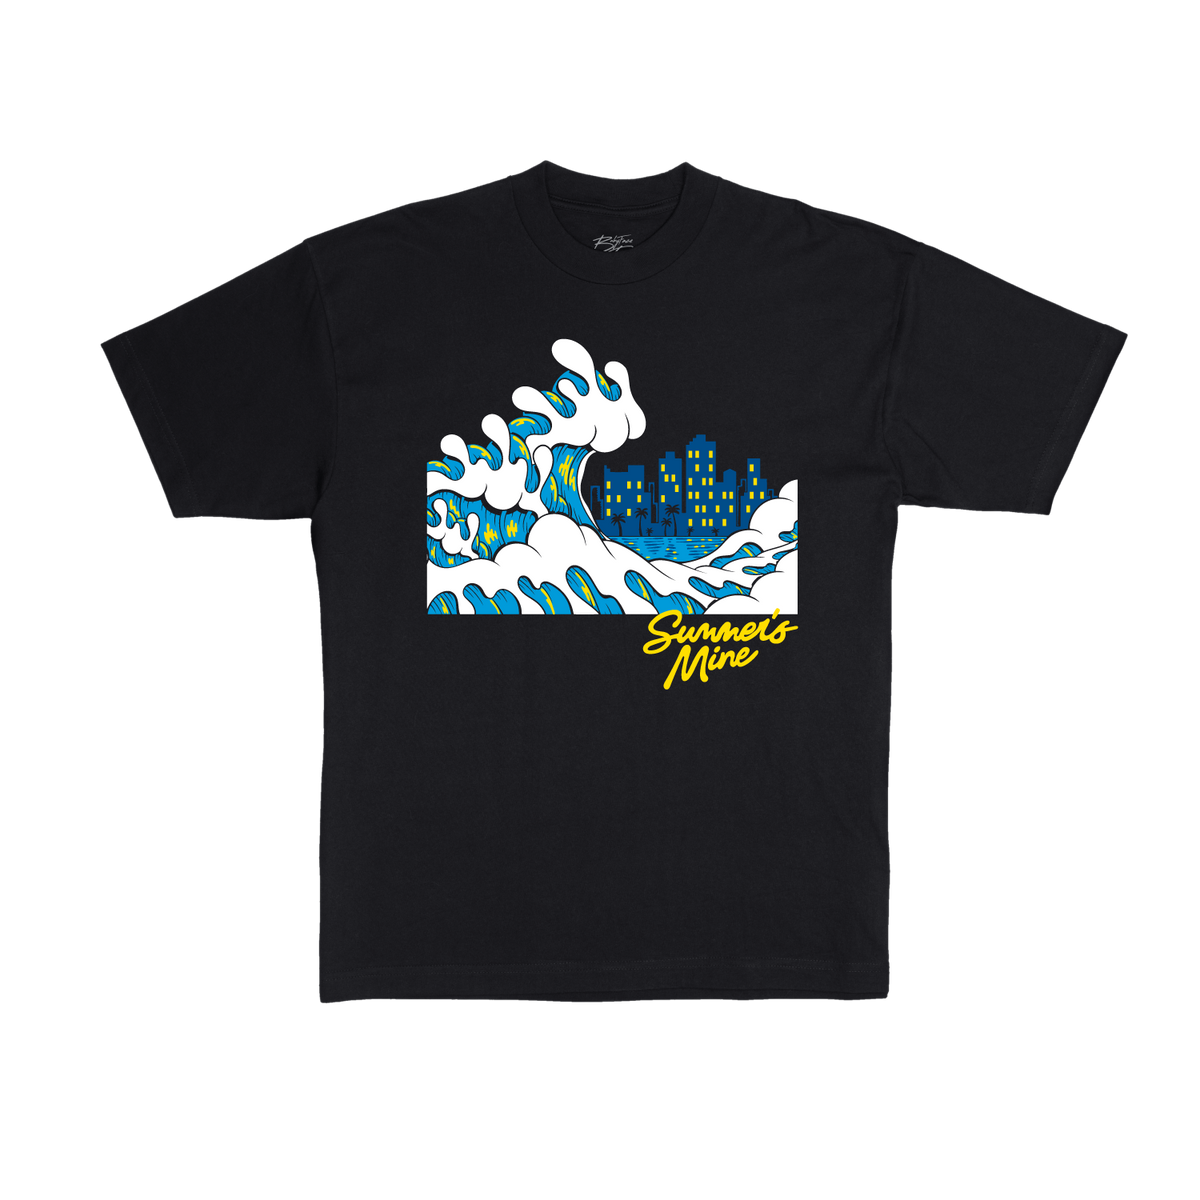 Aaron Kai x Wavy Gang T-Shirt